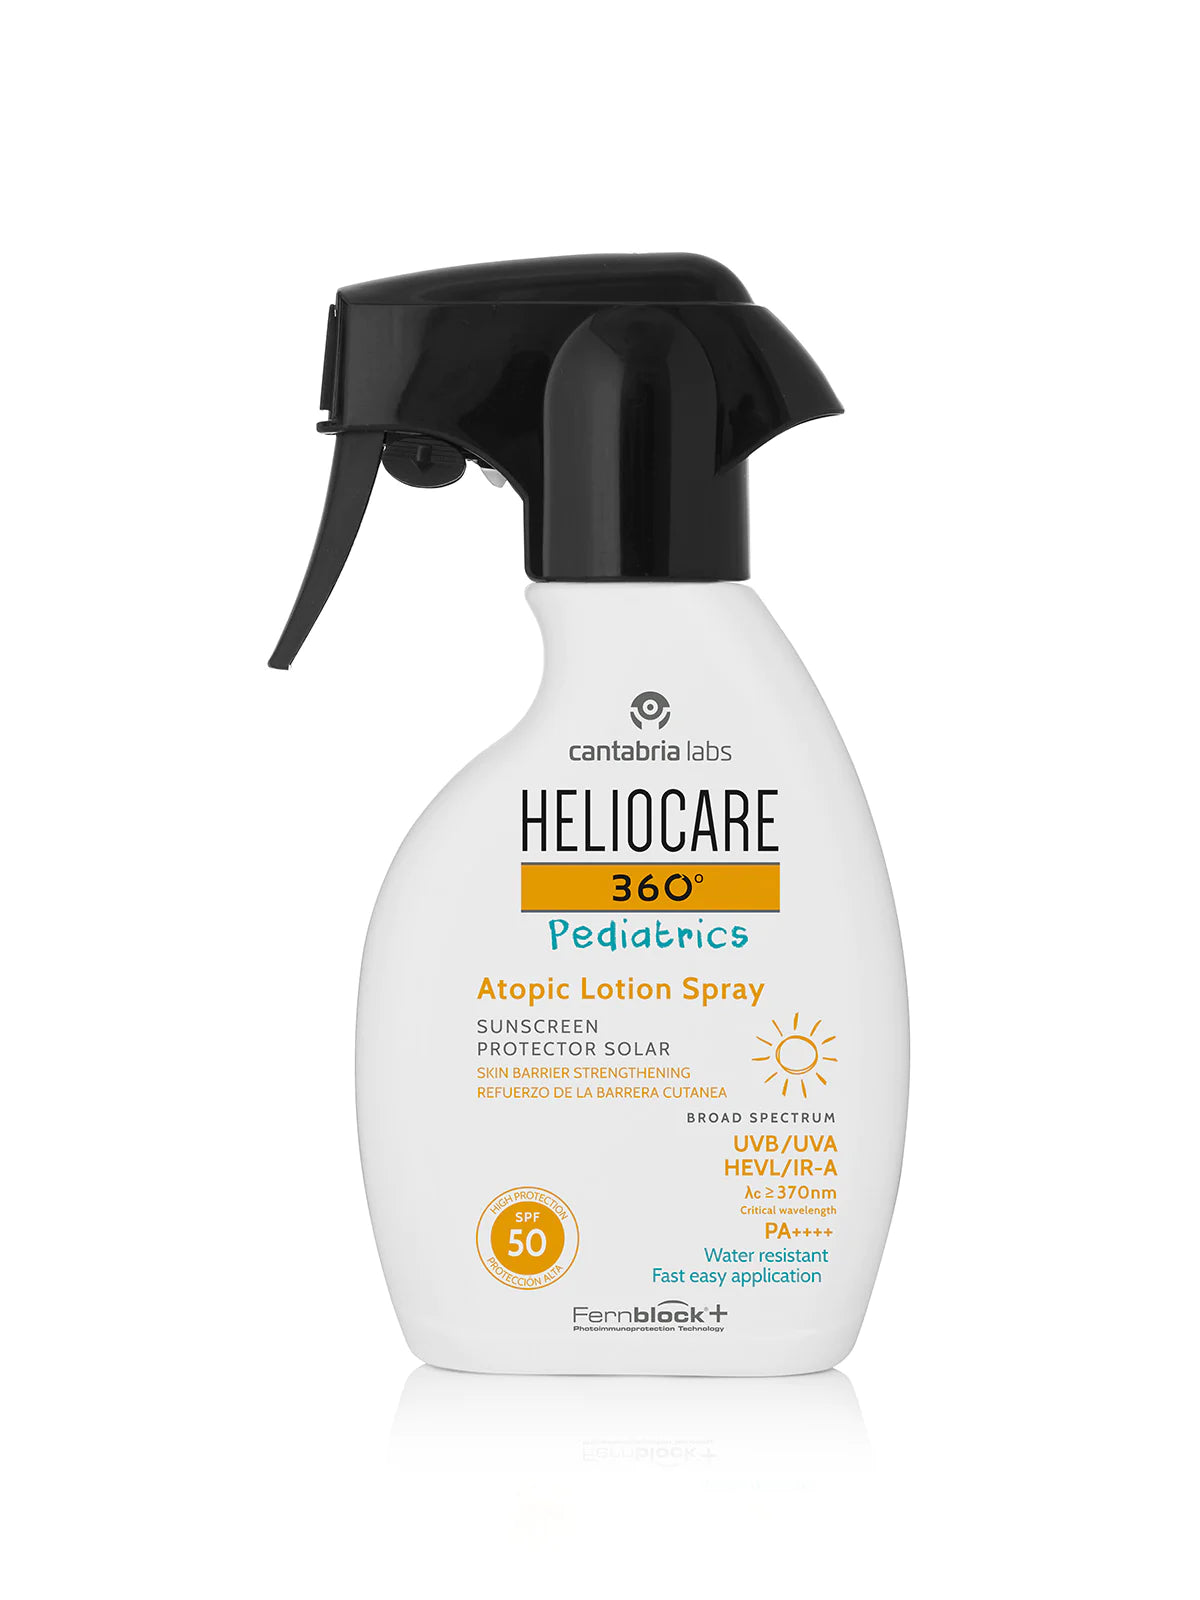 Heliocare 360 Pediatrics Atopic Lotion Spray SPF50 250ml